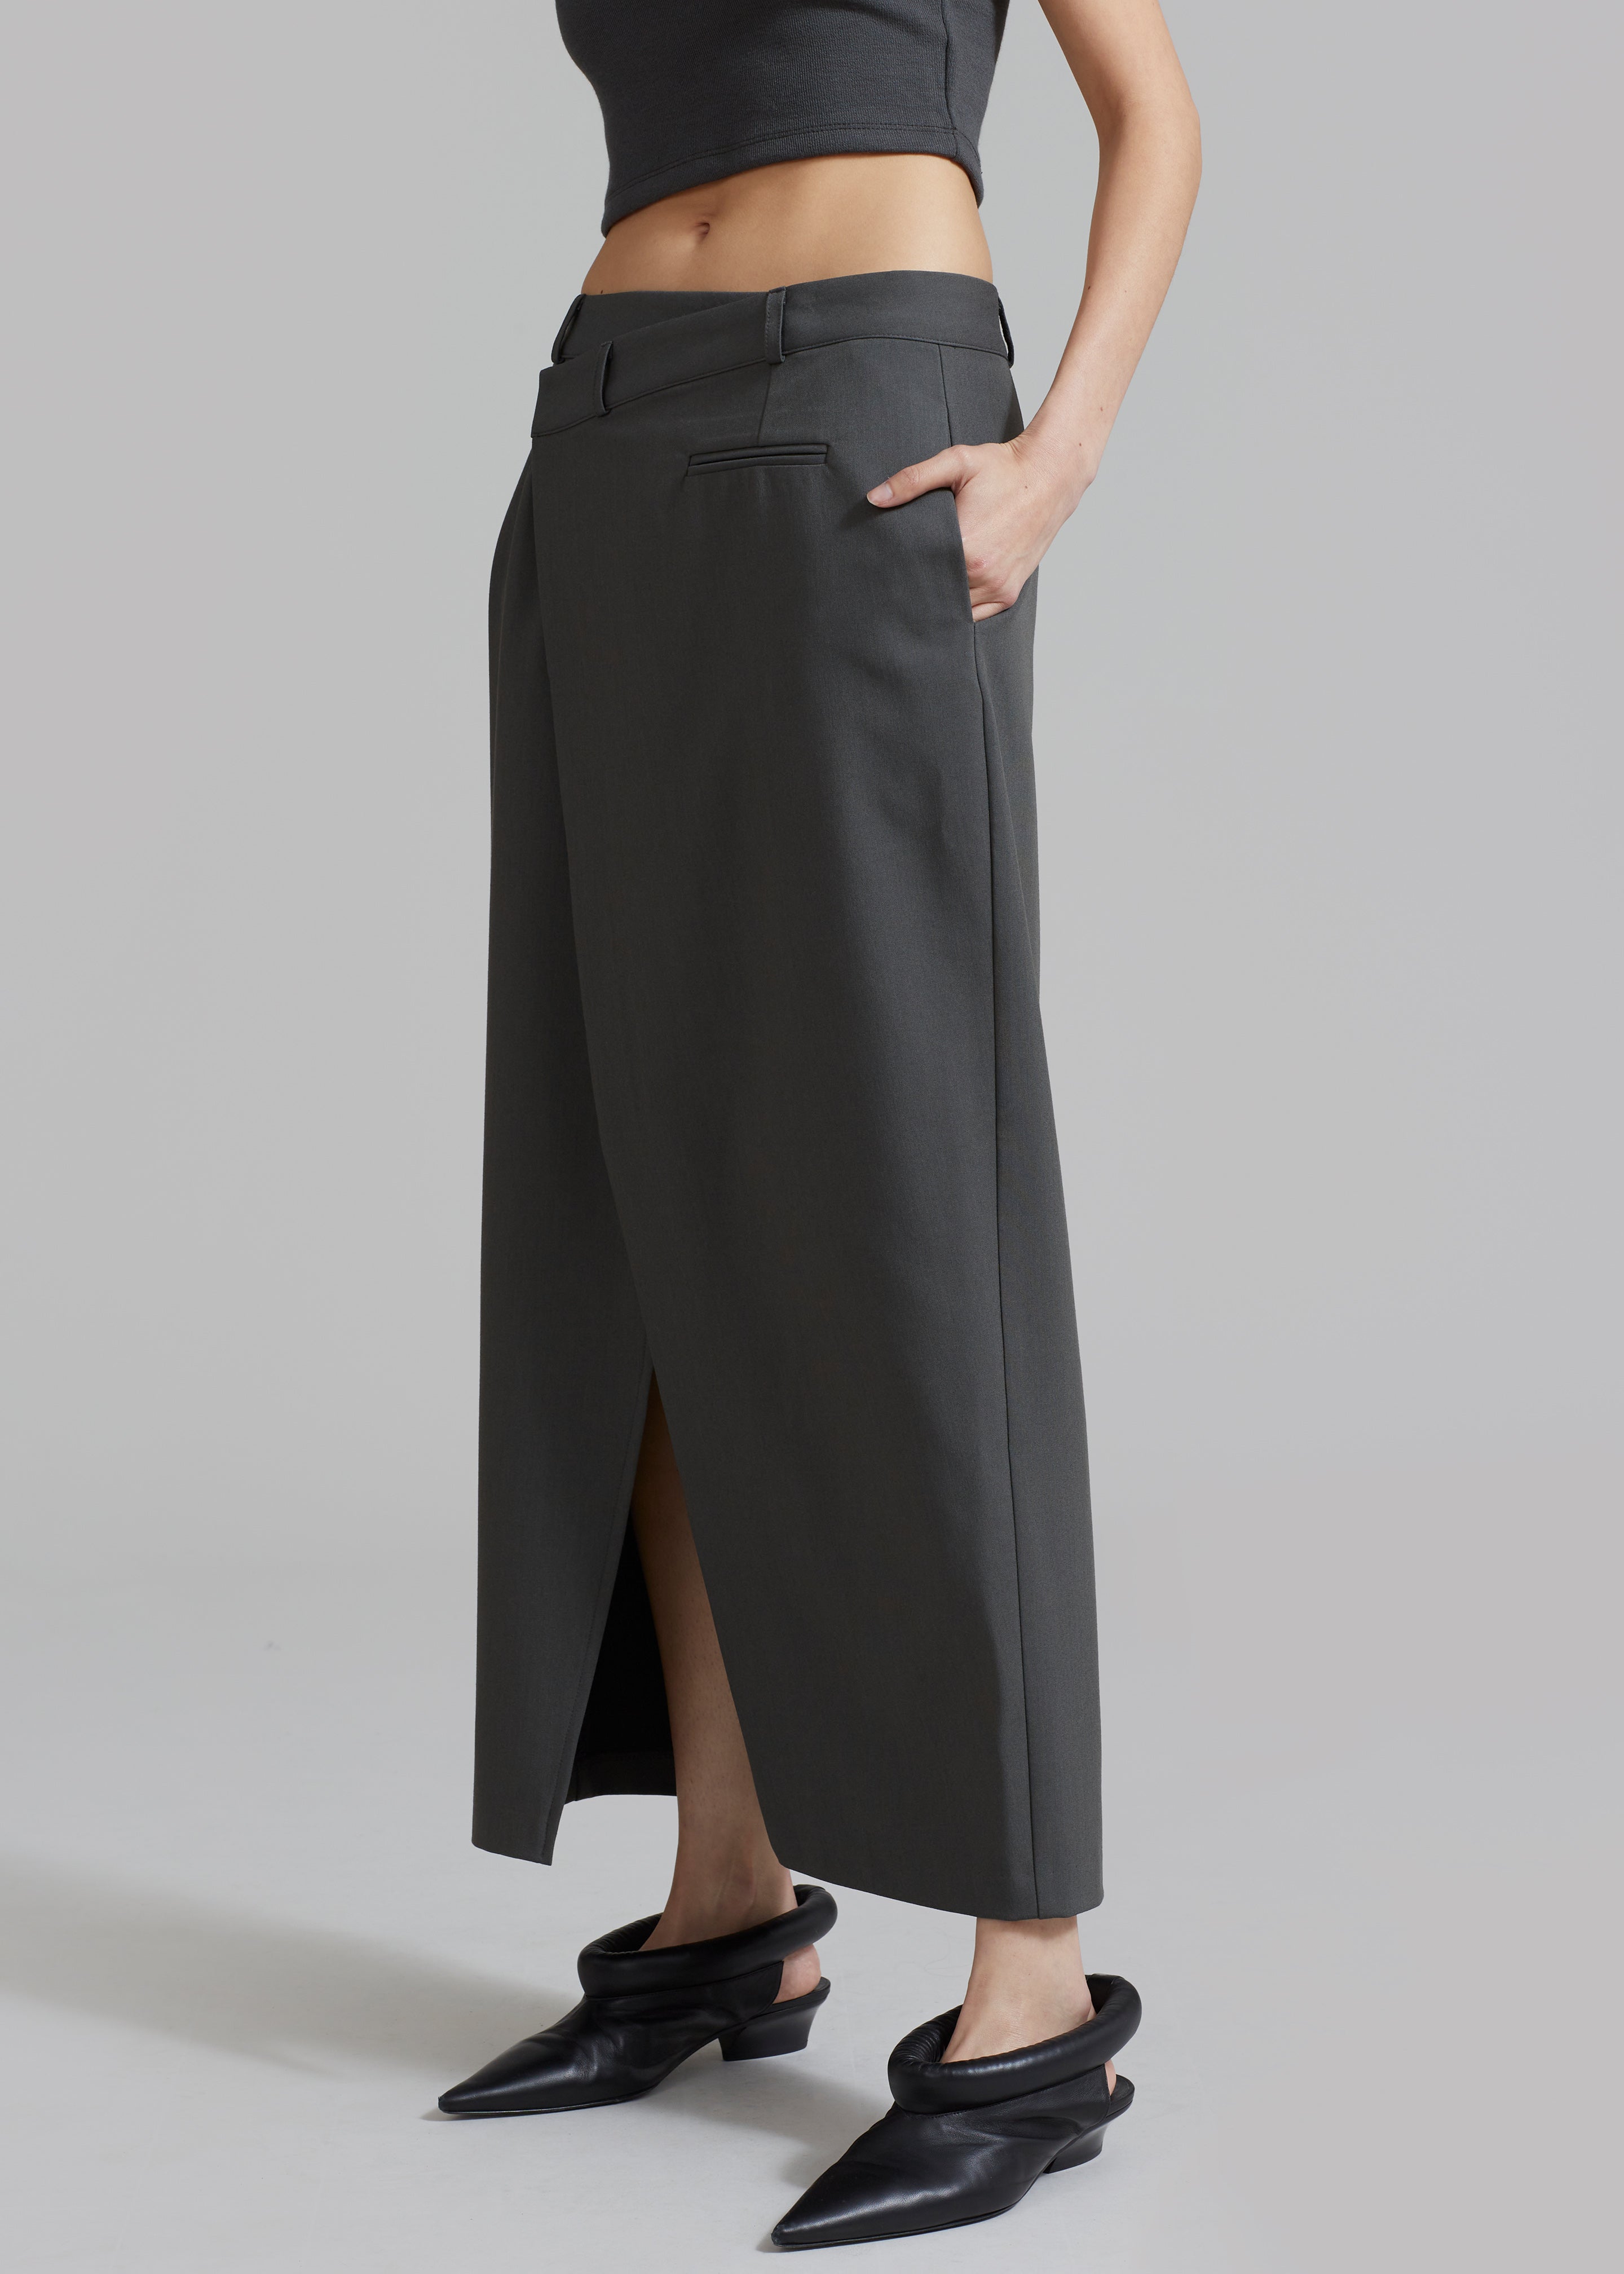 Annabel Asymmetric Midi Skirt - Grey - 4